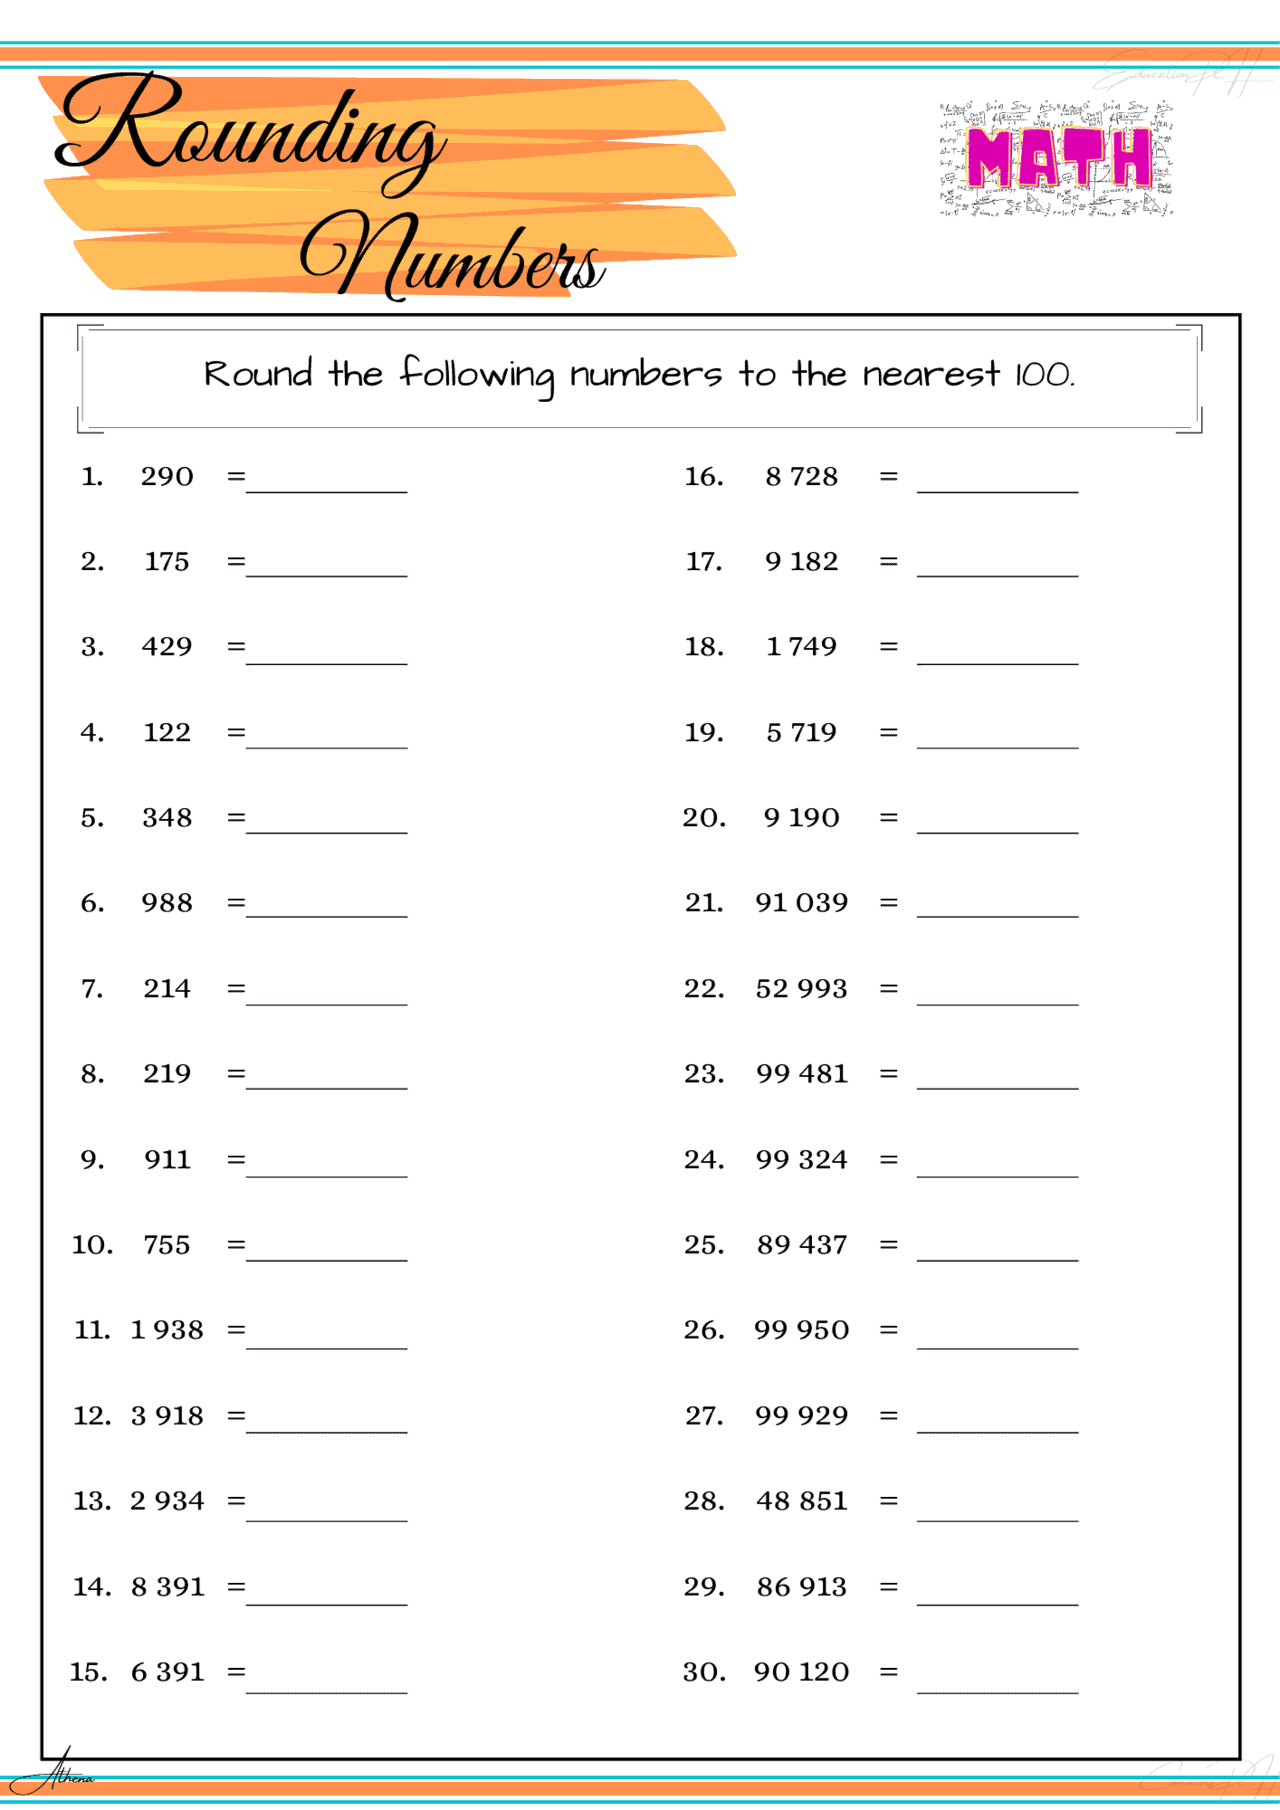 rounding numbers homework